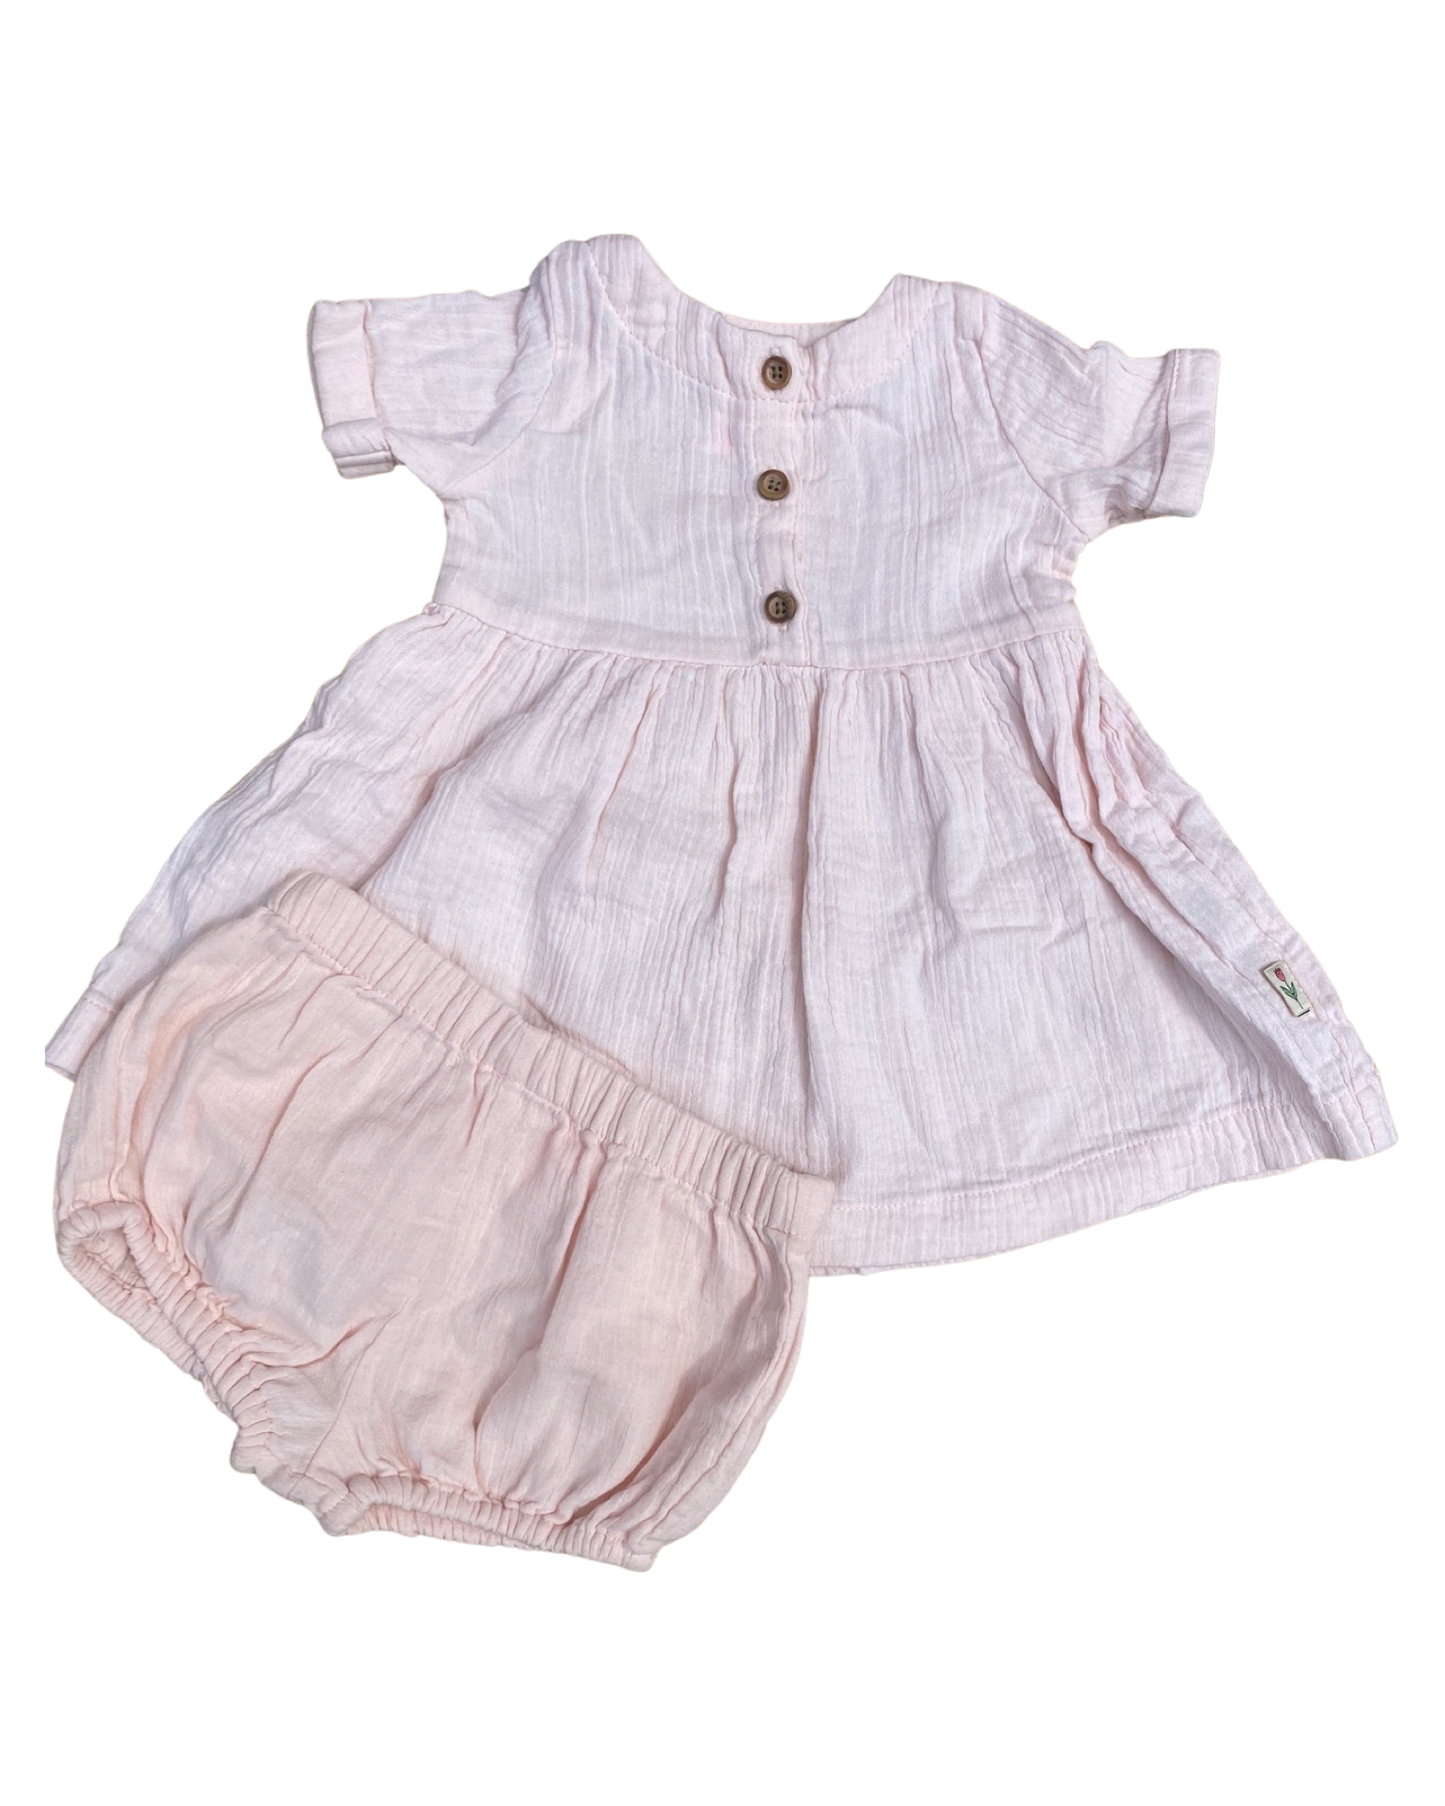 Hema lightweight cotton dress & matching nappy cover (size 6-9mths)